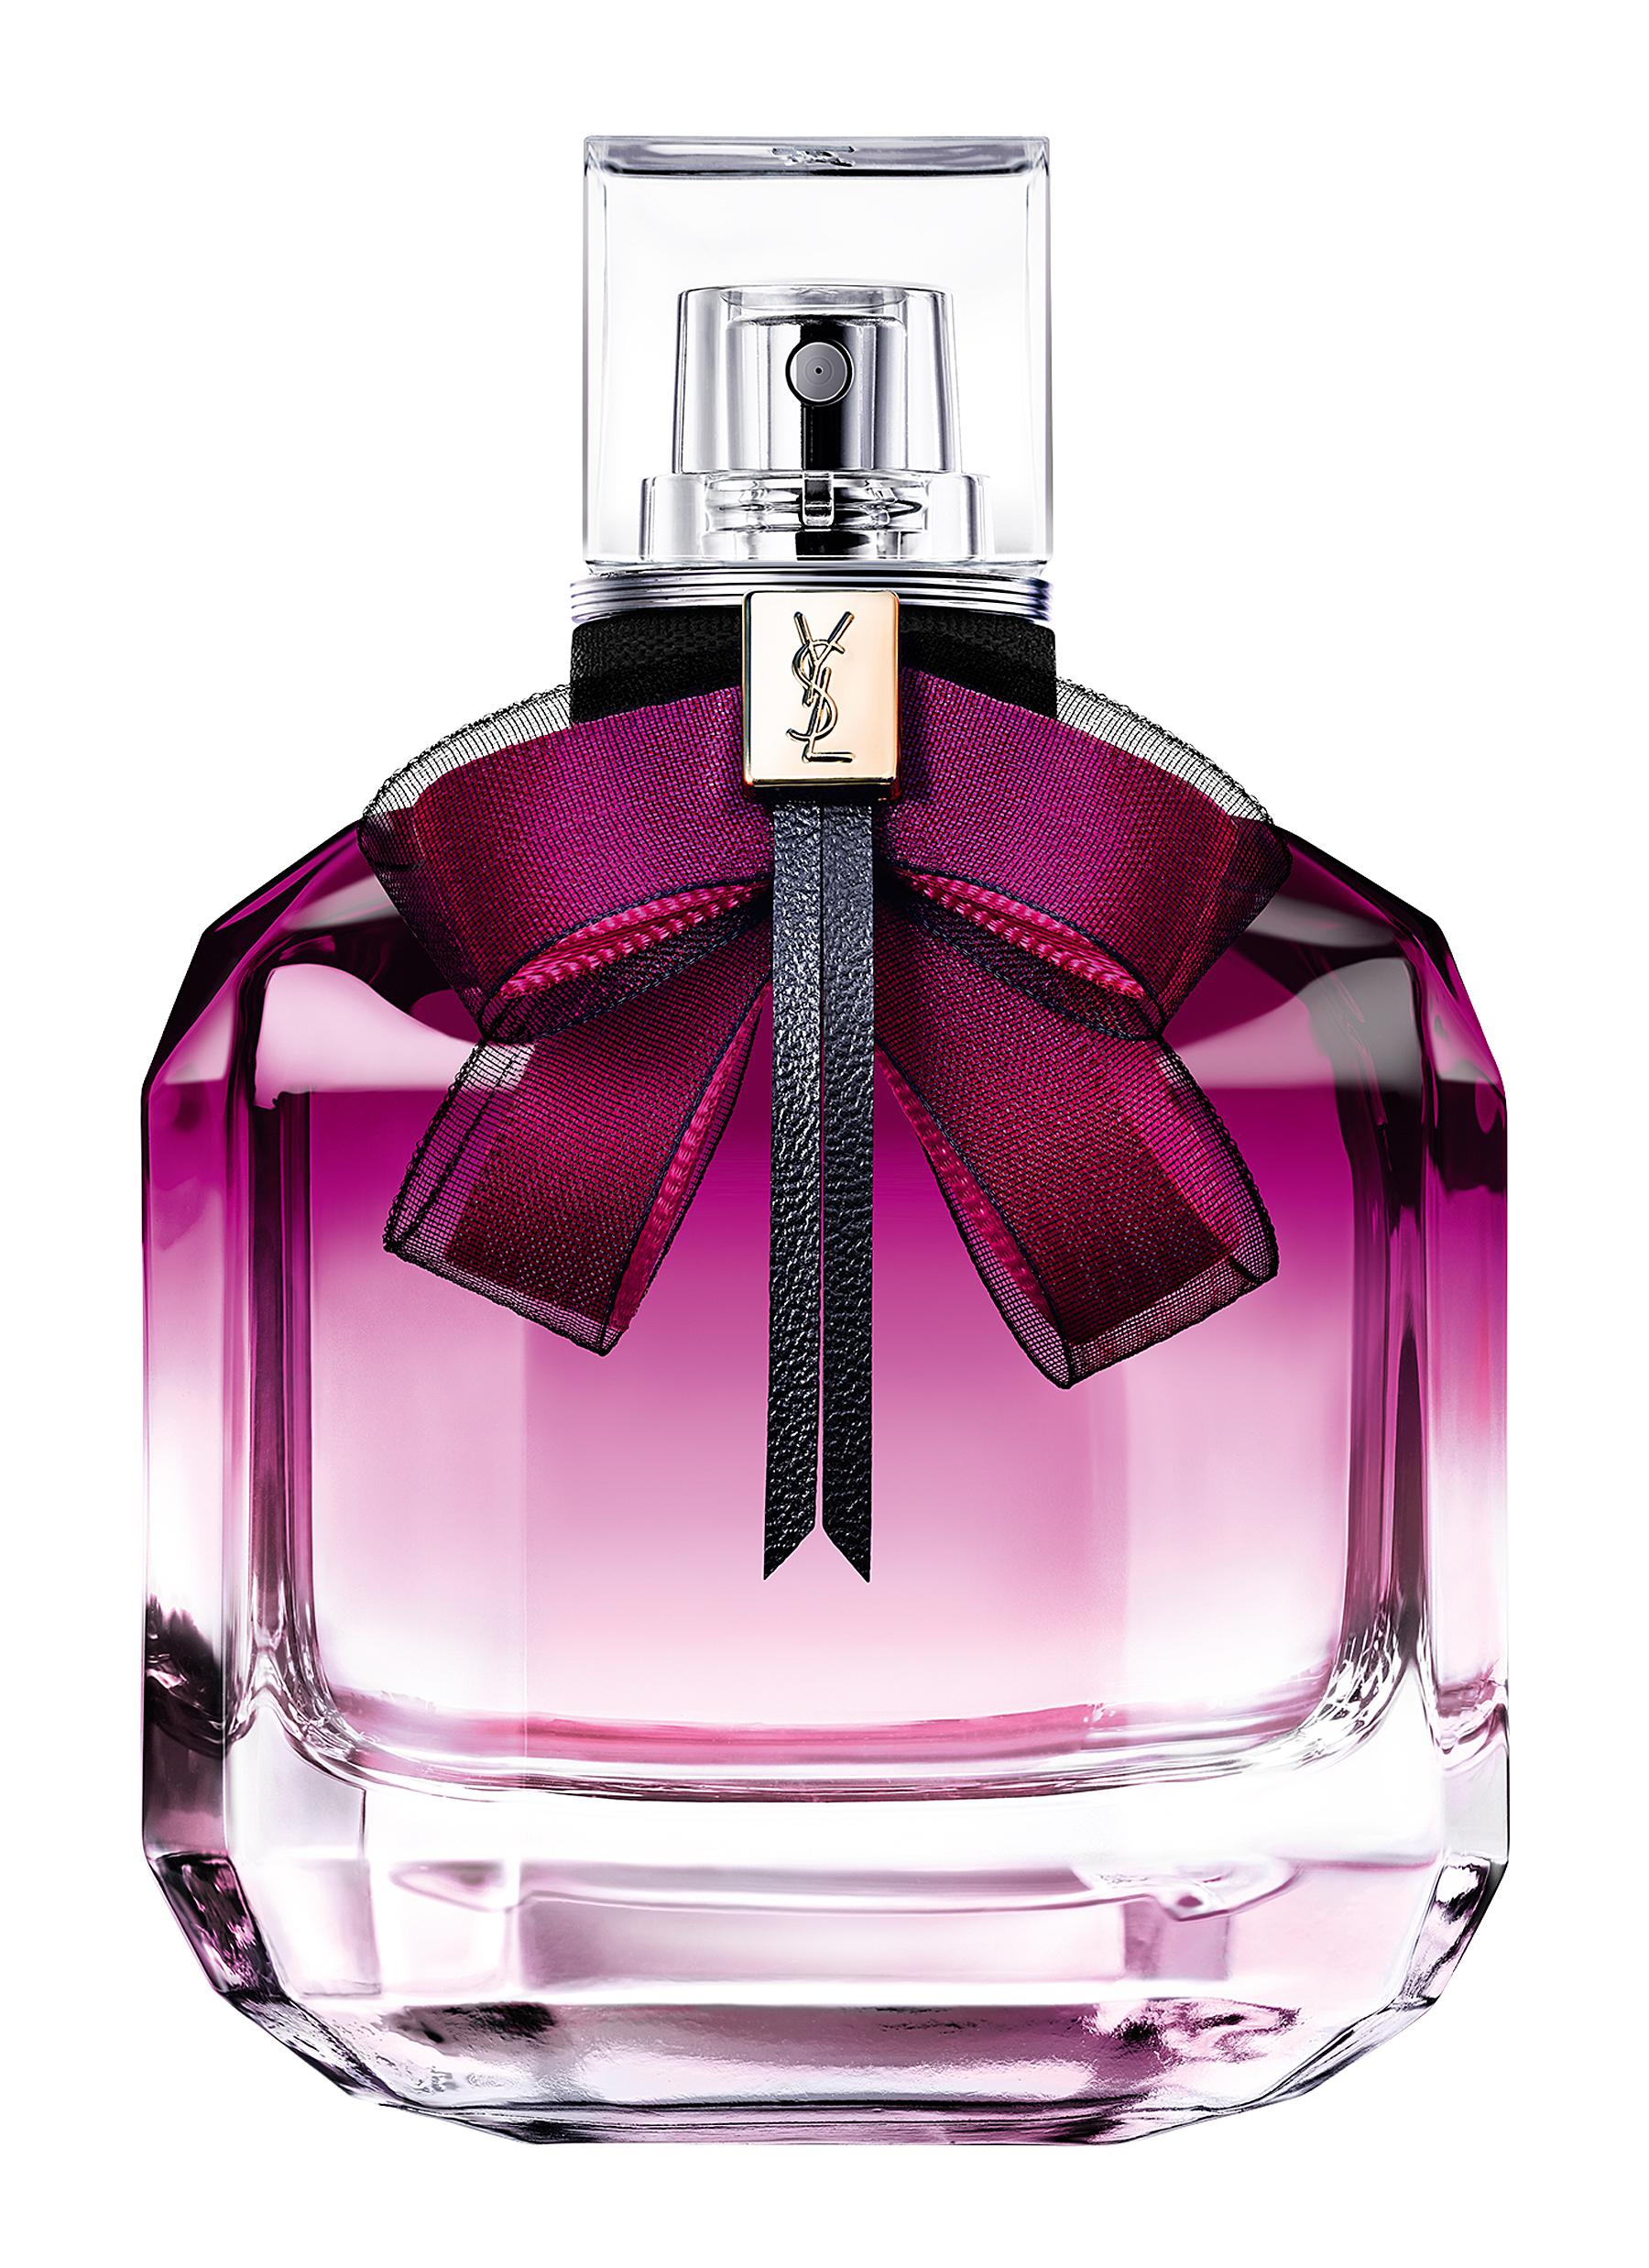 ysl pink bottle perfume